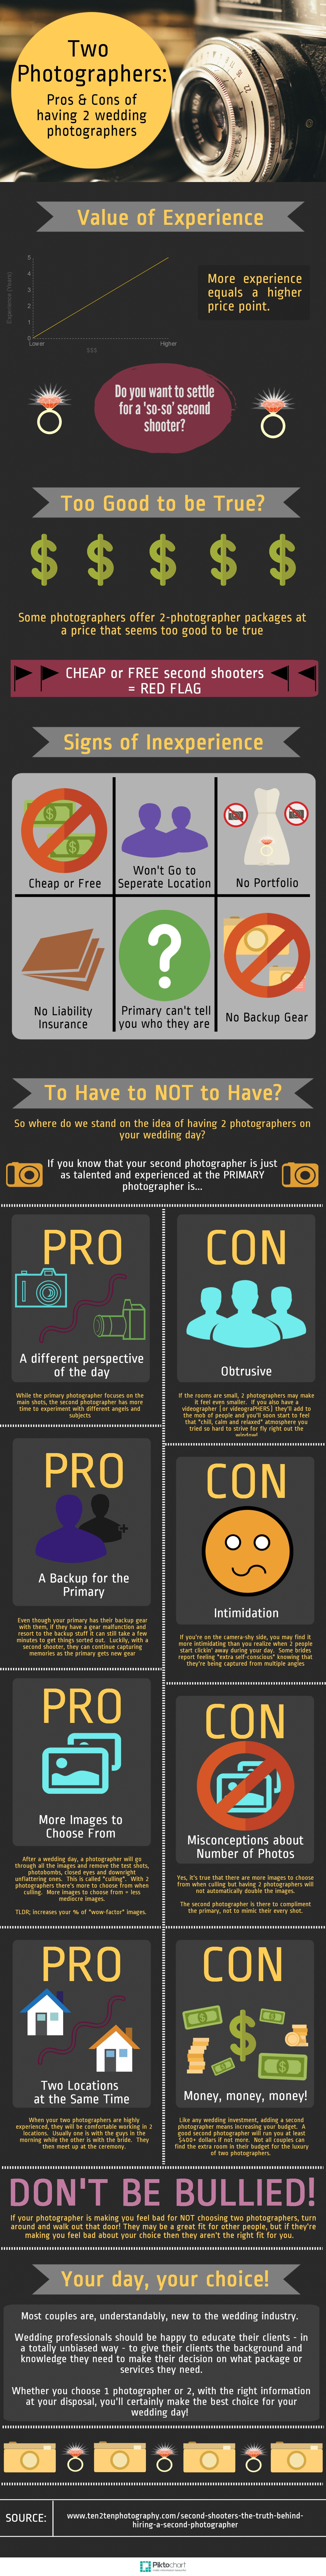 Do You Really Need Two Wedding Photographers?